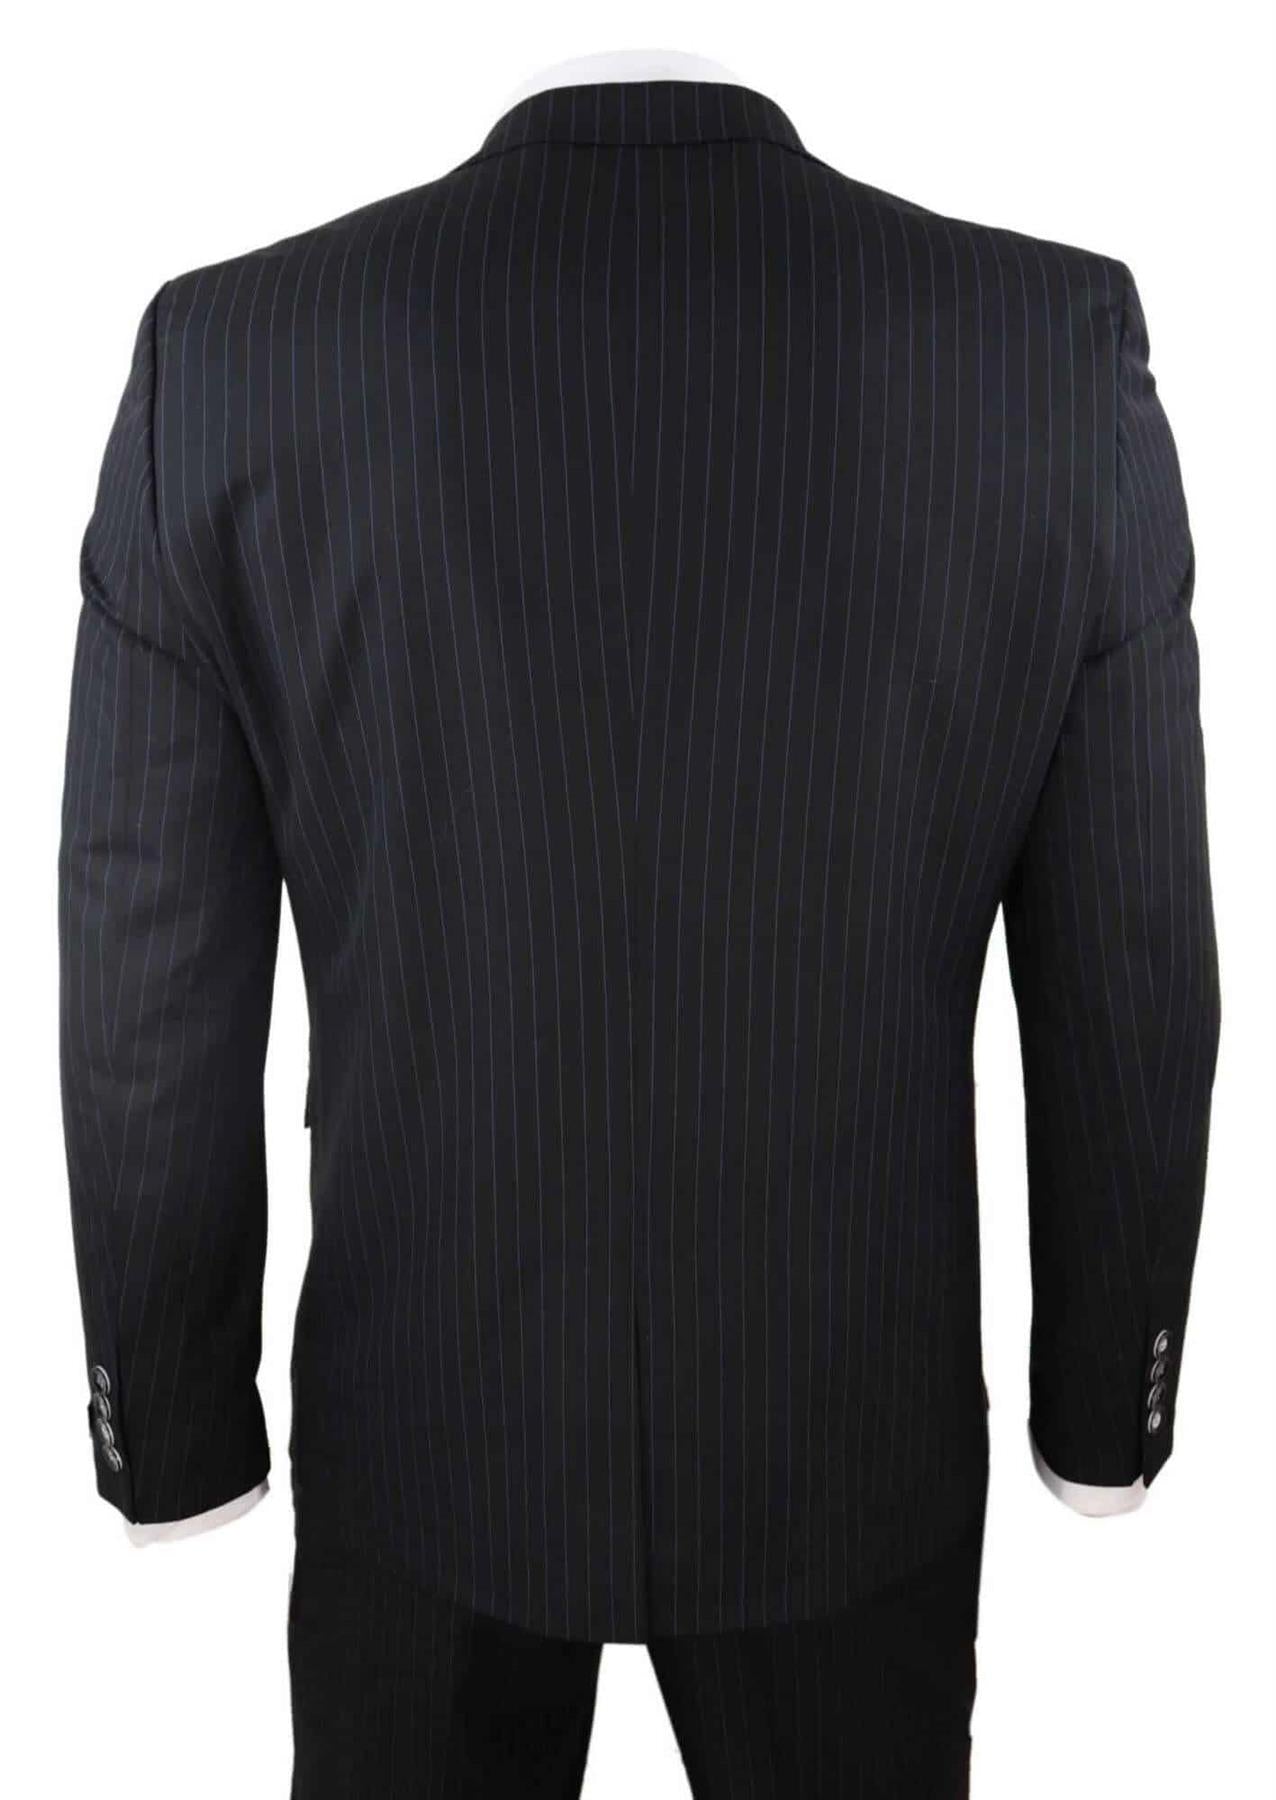 Men's 3 Piece Black Pinstripe Retro Suit